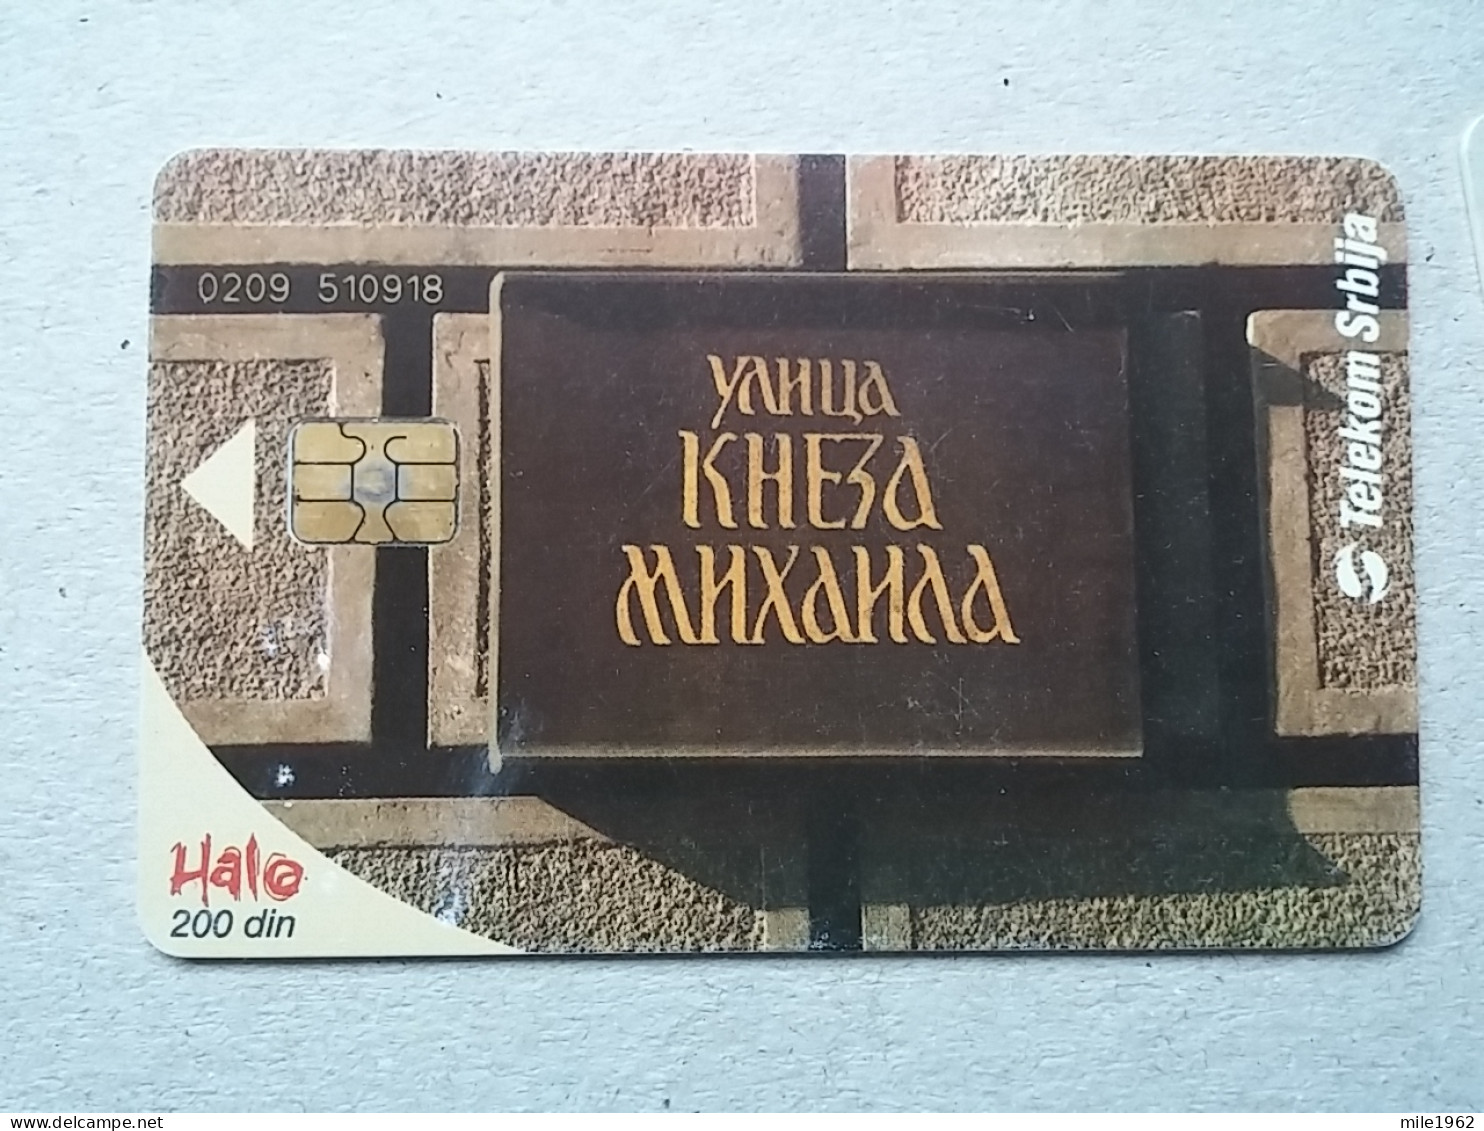 T-568 - SERBIA, Telecard, Télécarte, Phonecard, Halo Kartica,  - Jugoslawien